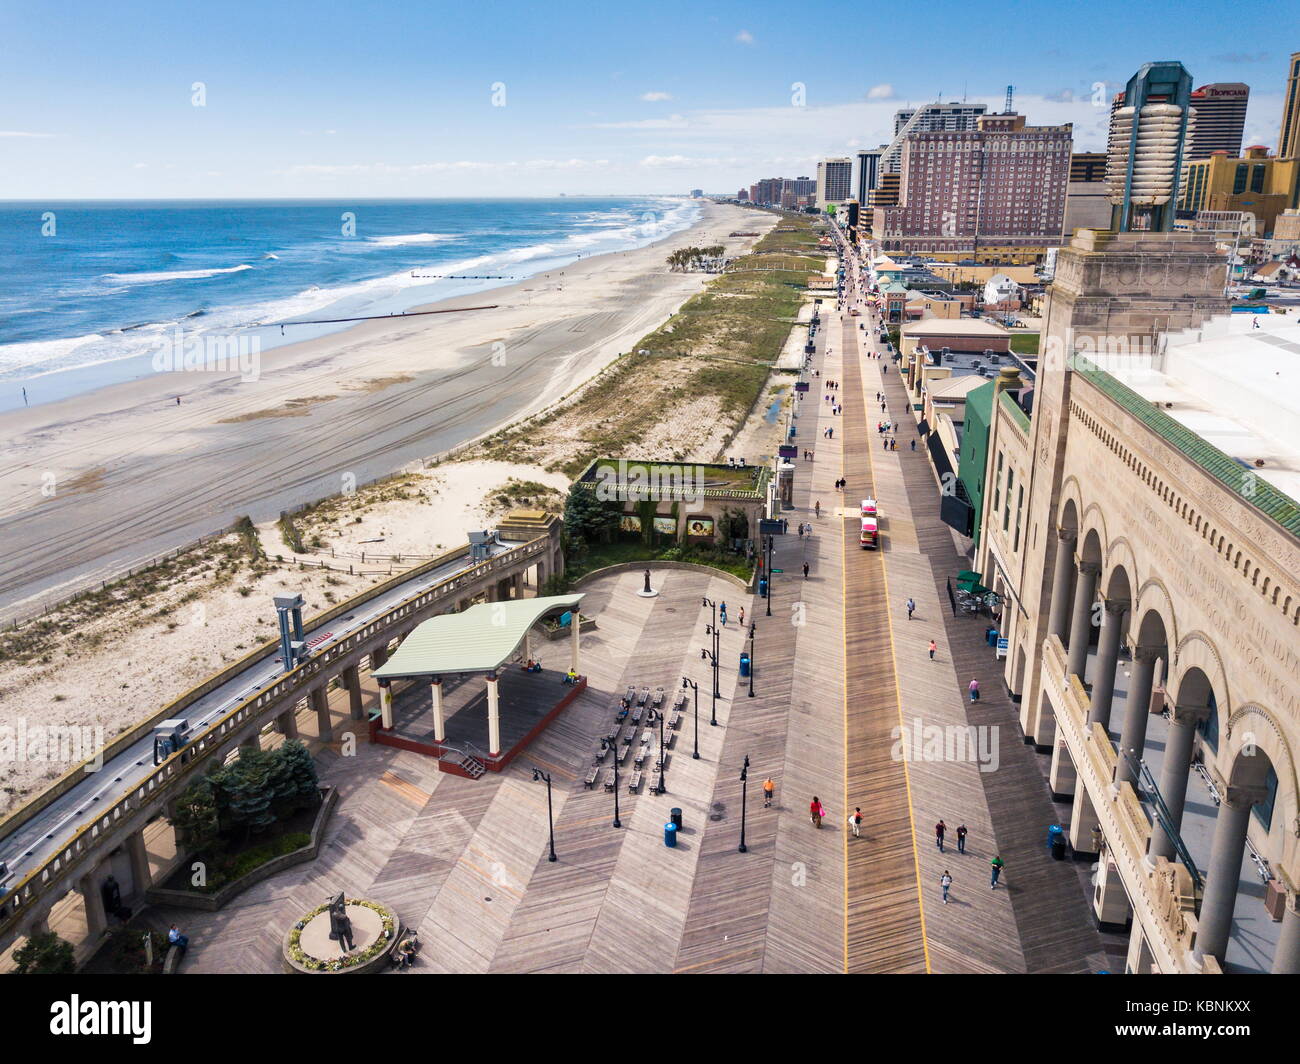 ATLANTIC CITY, USA - SEPTEMBER 20, 2017: Atlantic city boardwalk aerial view. Boardwalk is the hub of casinos, restaurants and travel spots Stock Photo